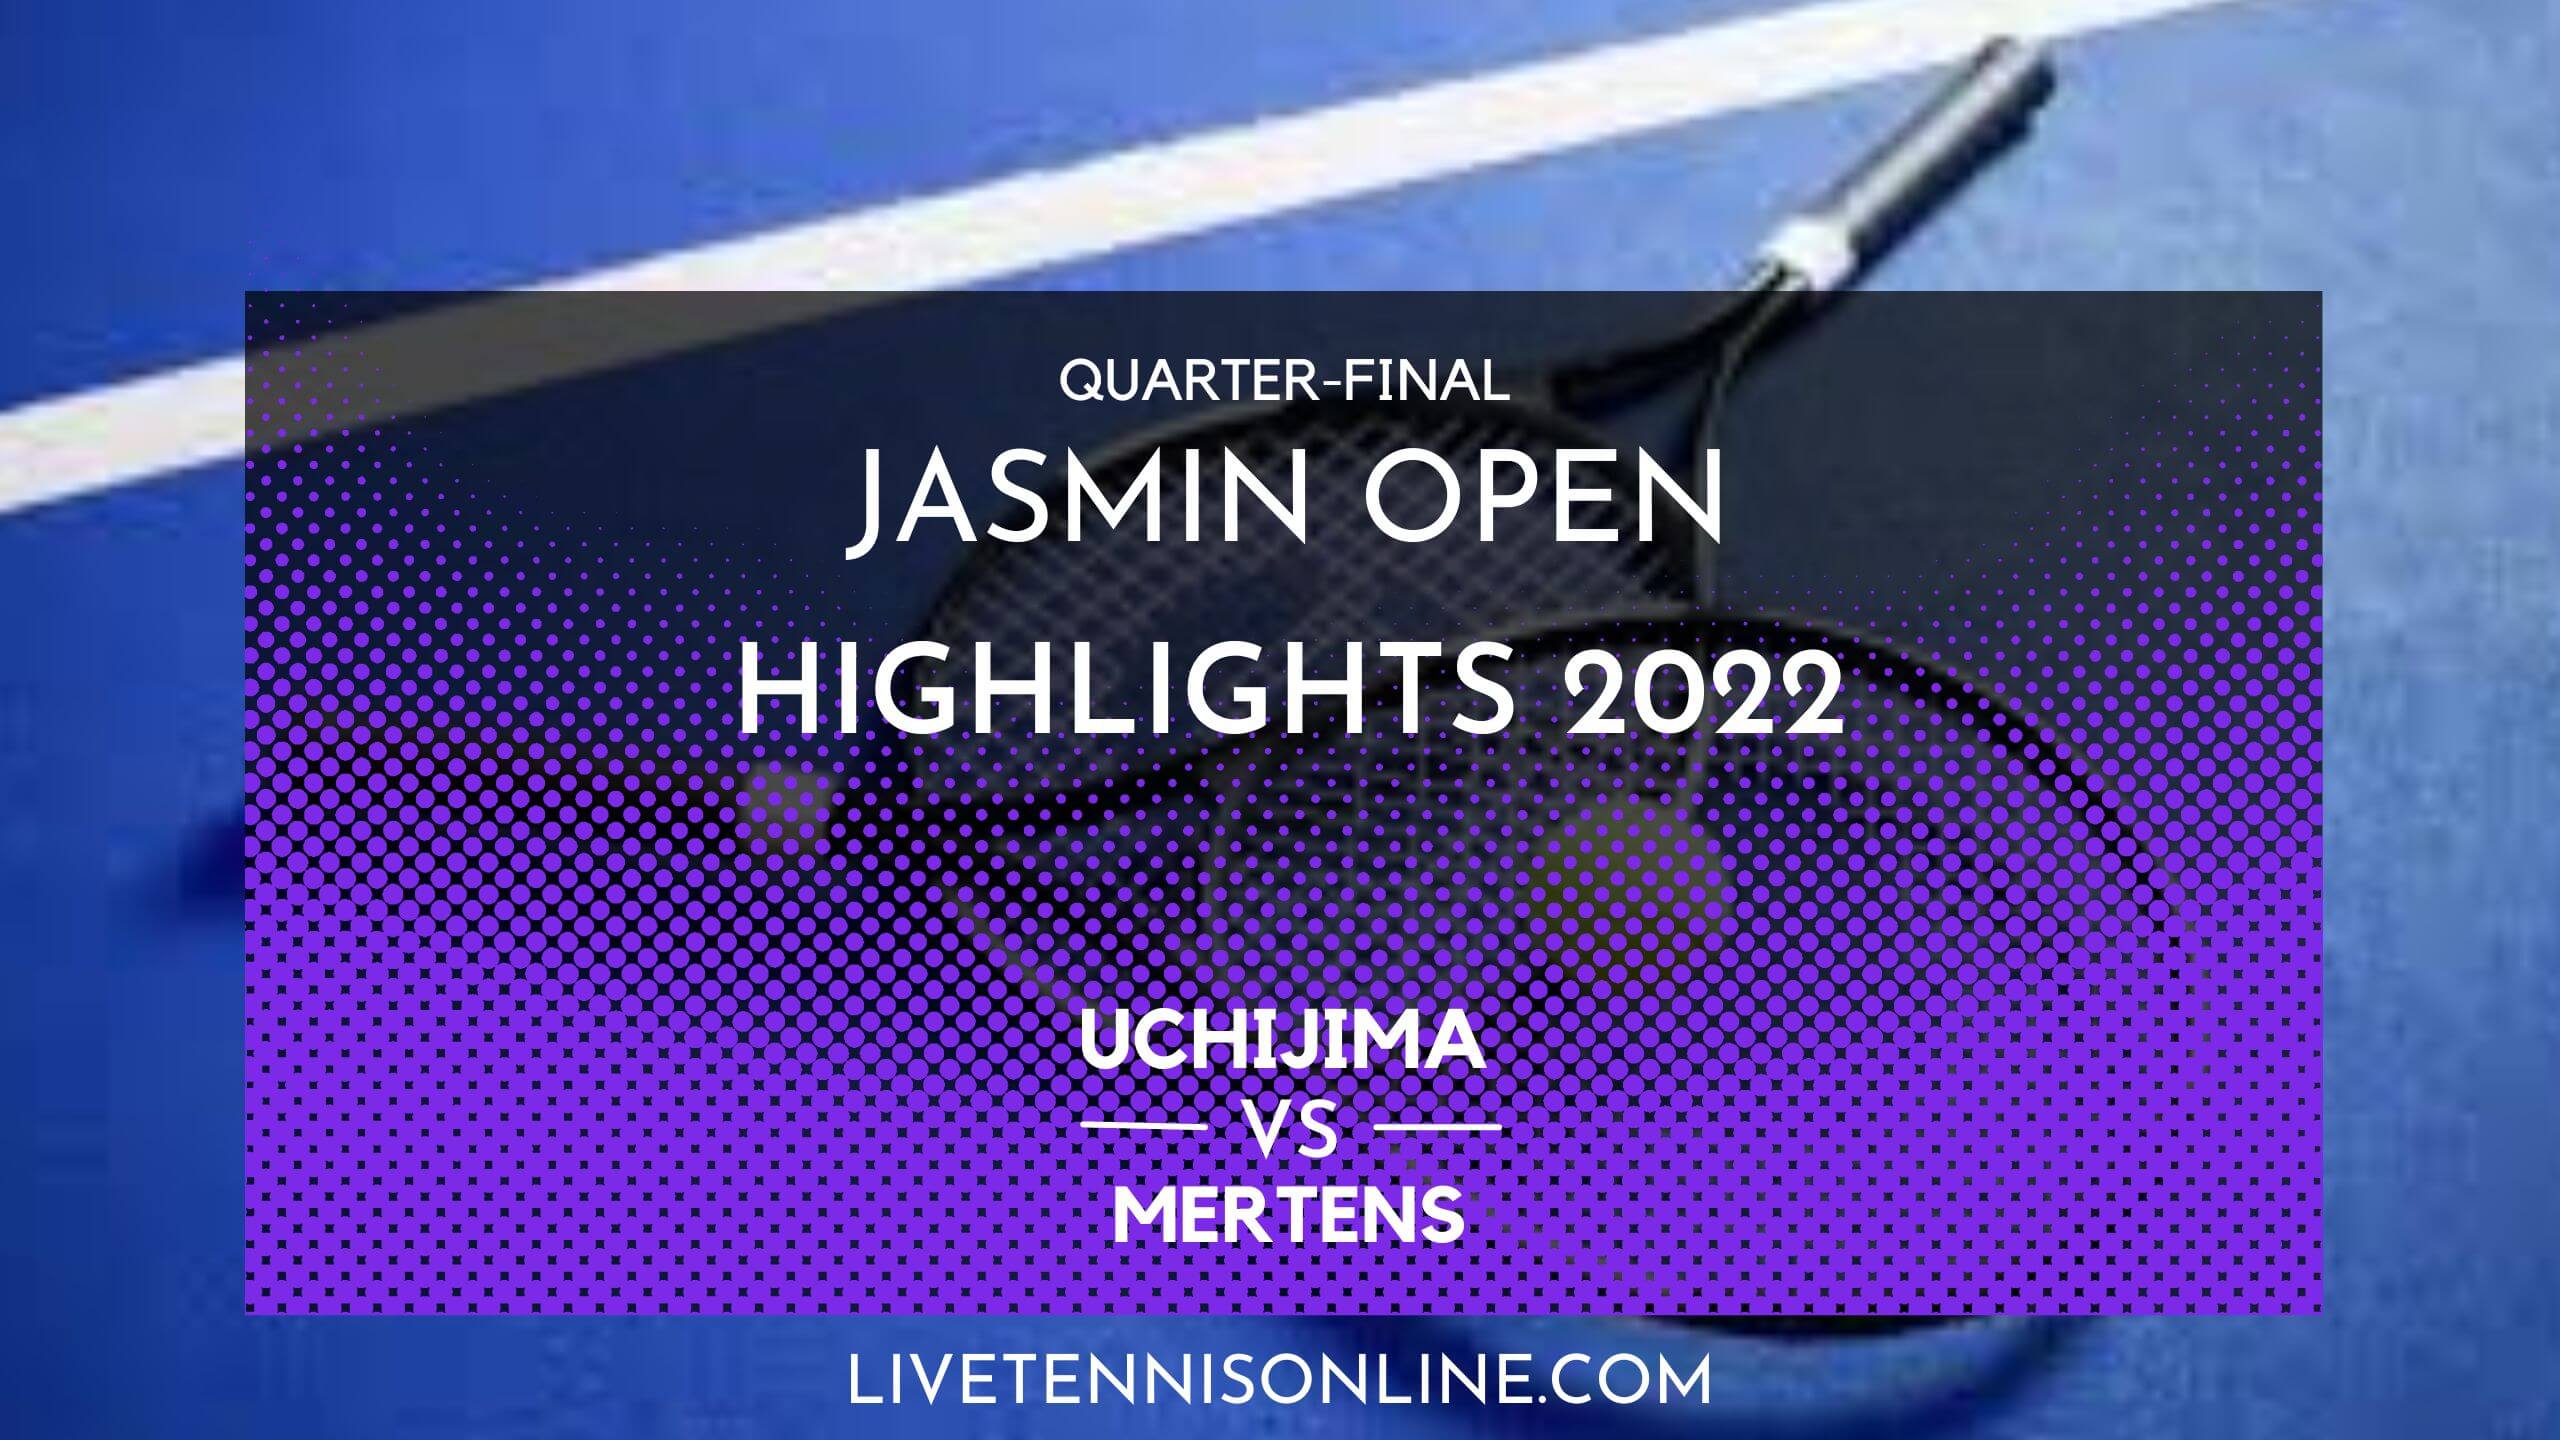 Uchijima Vs Mertens QF Highlights 2022 Jasmin Open